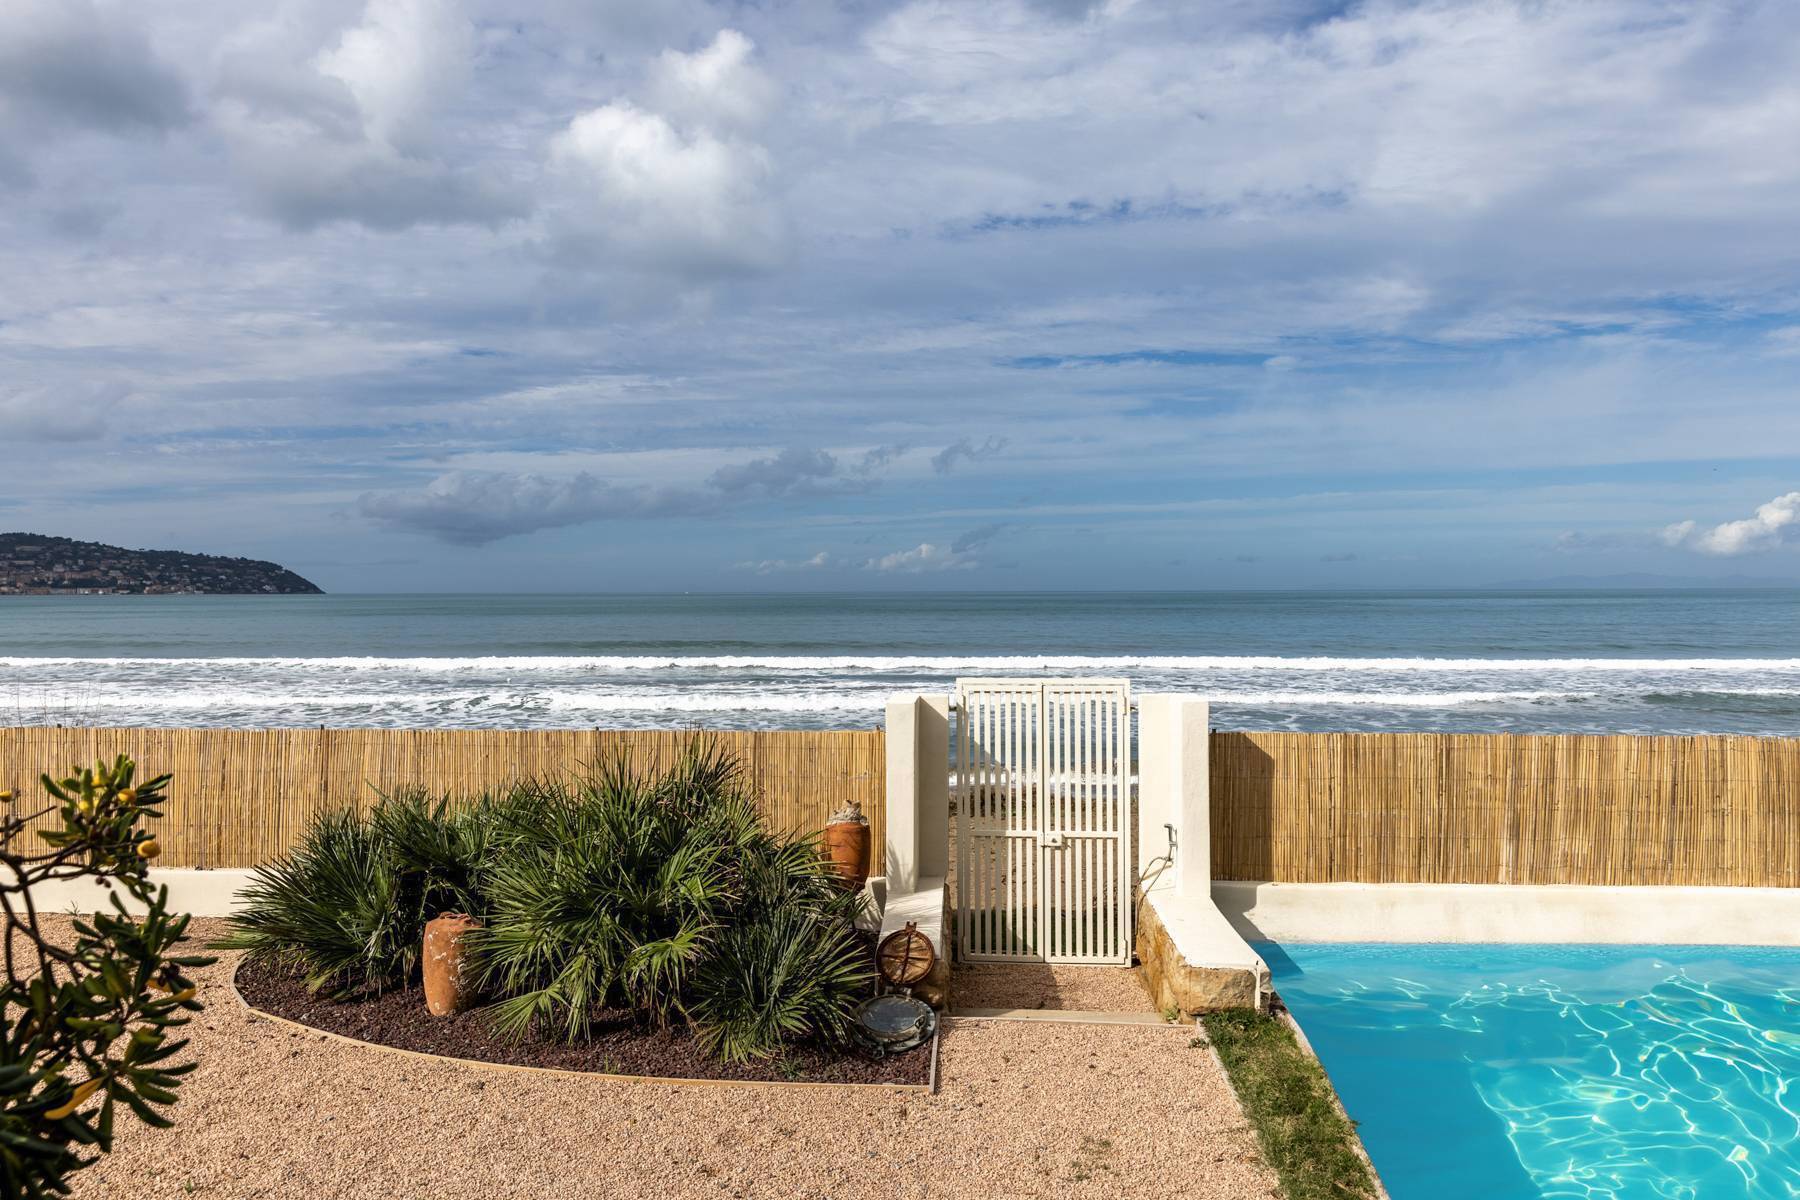 Argentario: exclusive villa with direct access to the sea